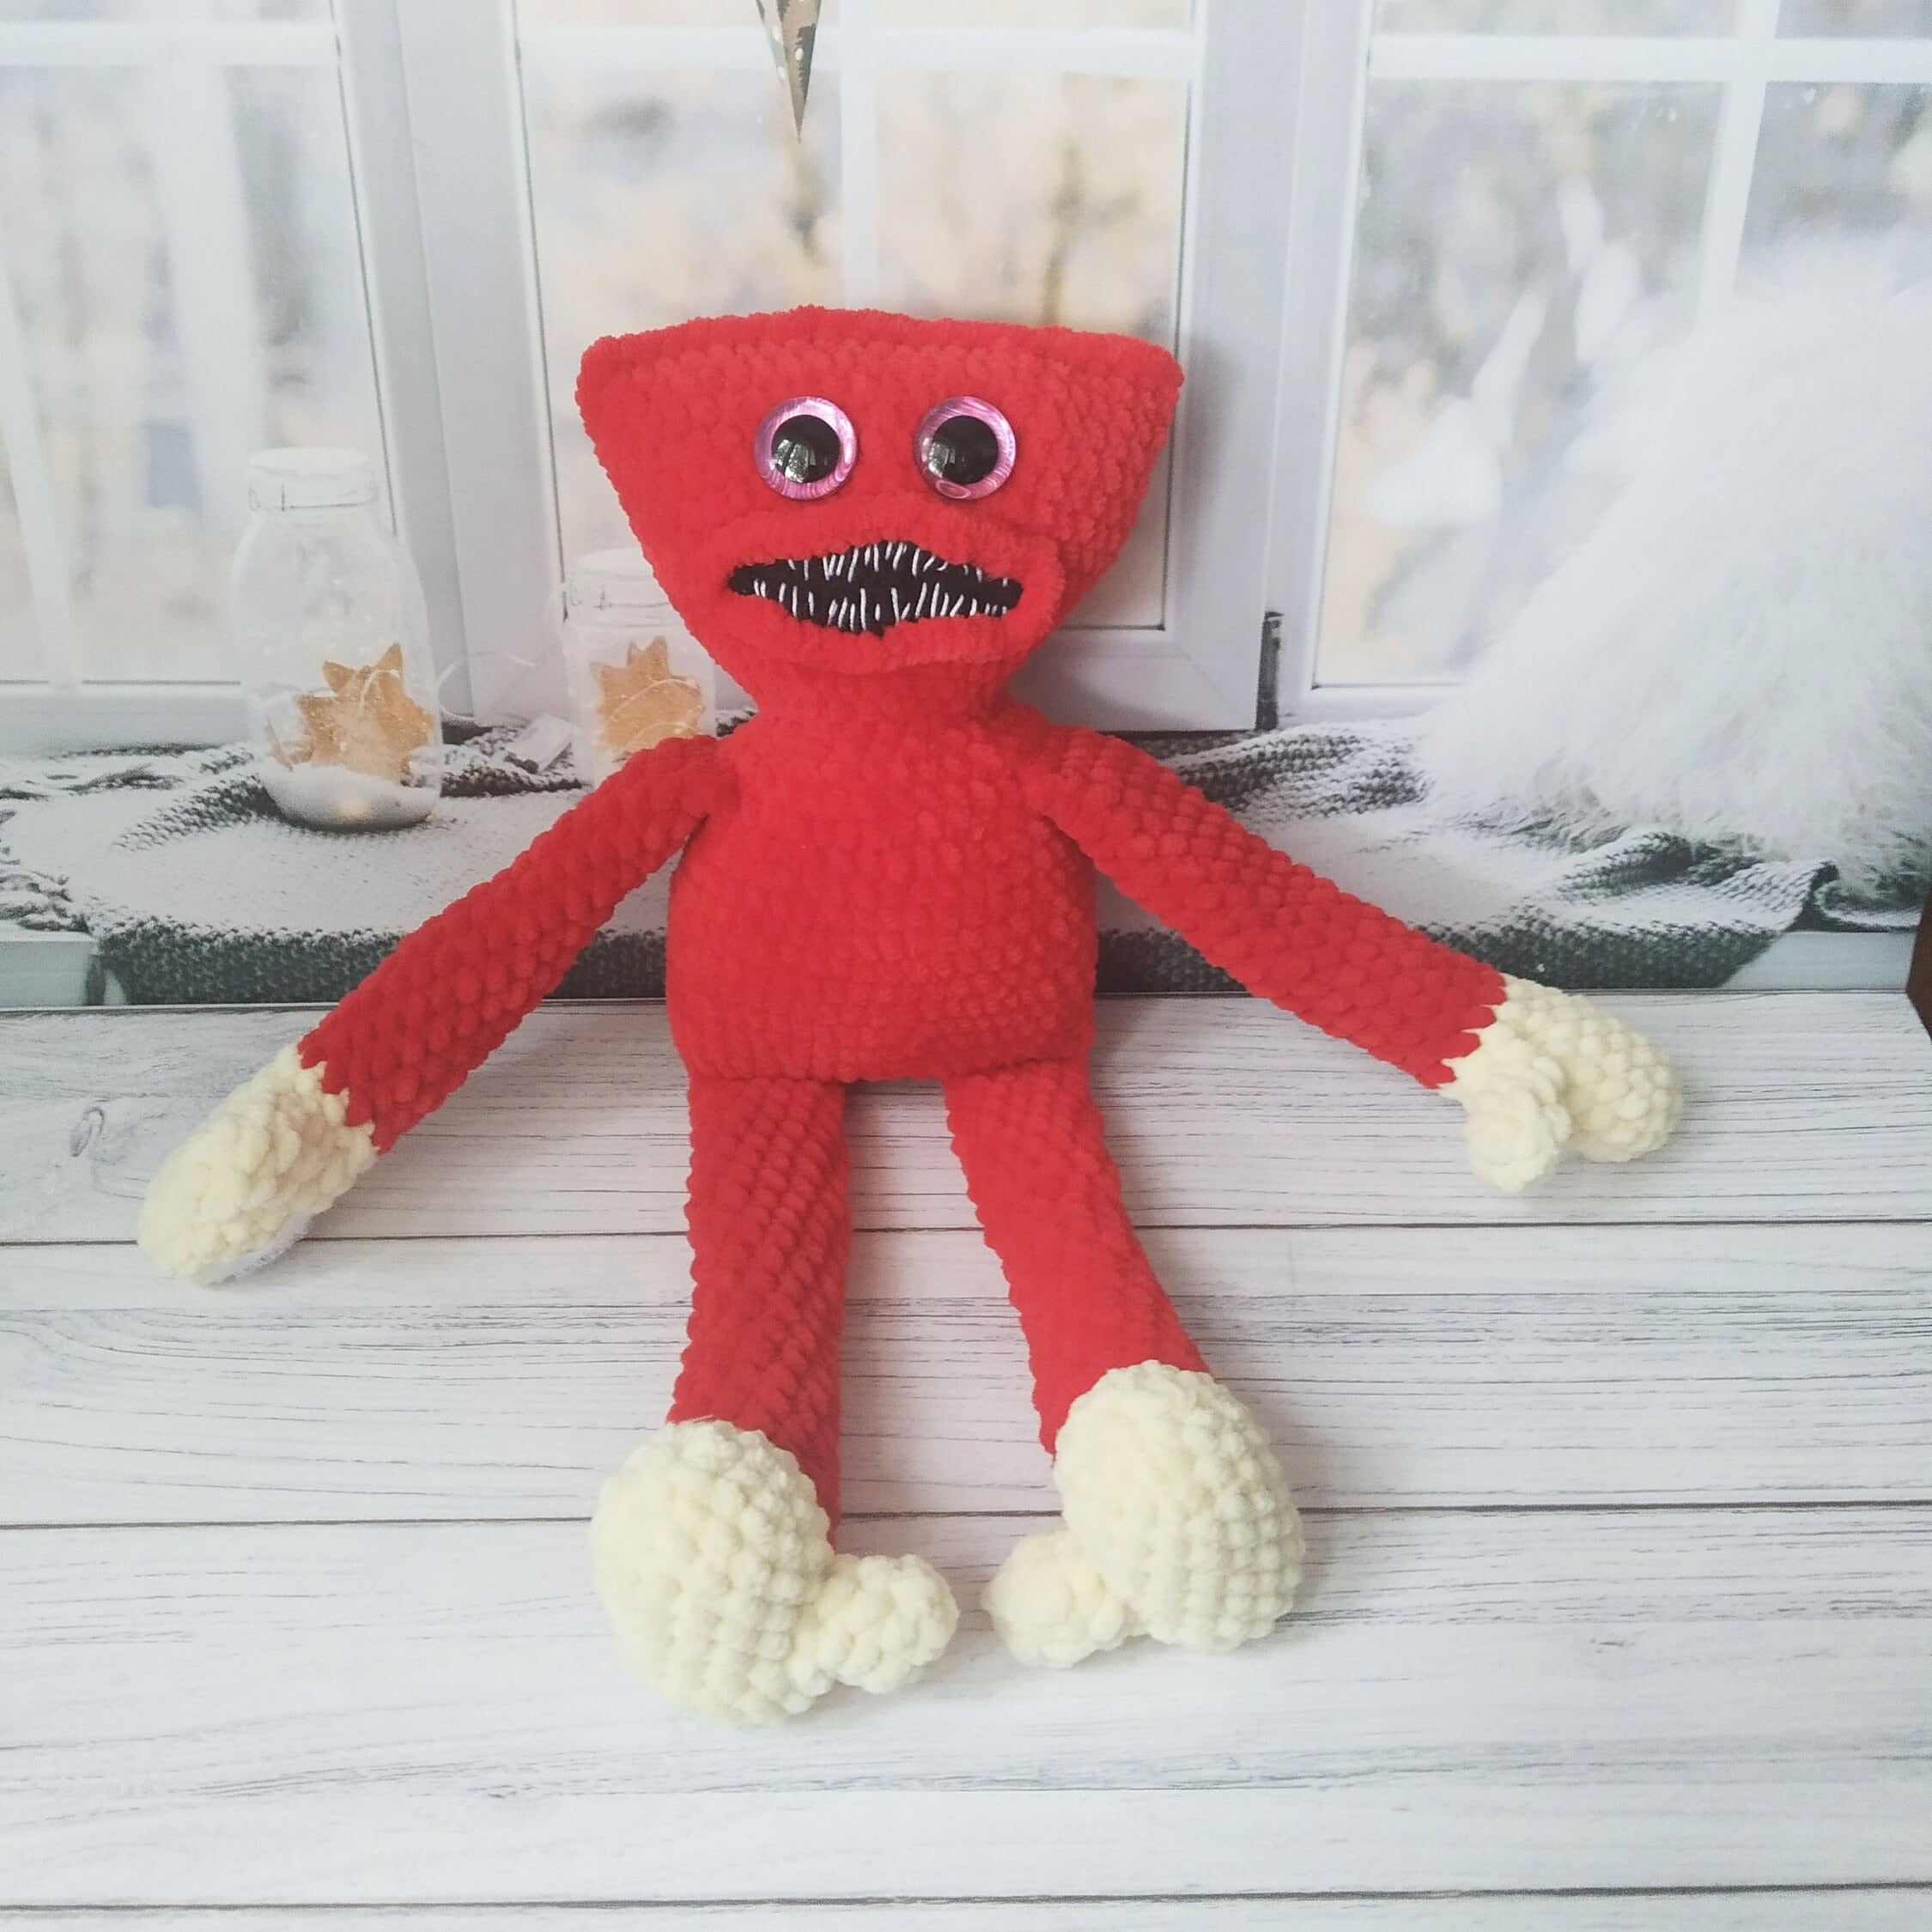 Buy Wholesale China Poppy Playtime Plush Toys Monster Dolls Scary